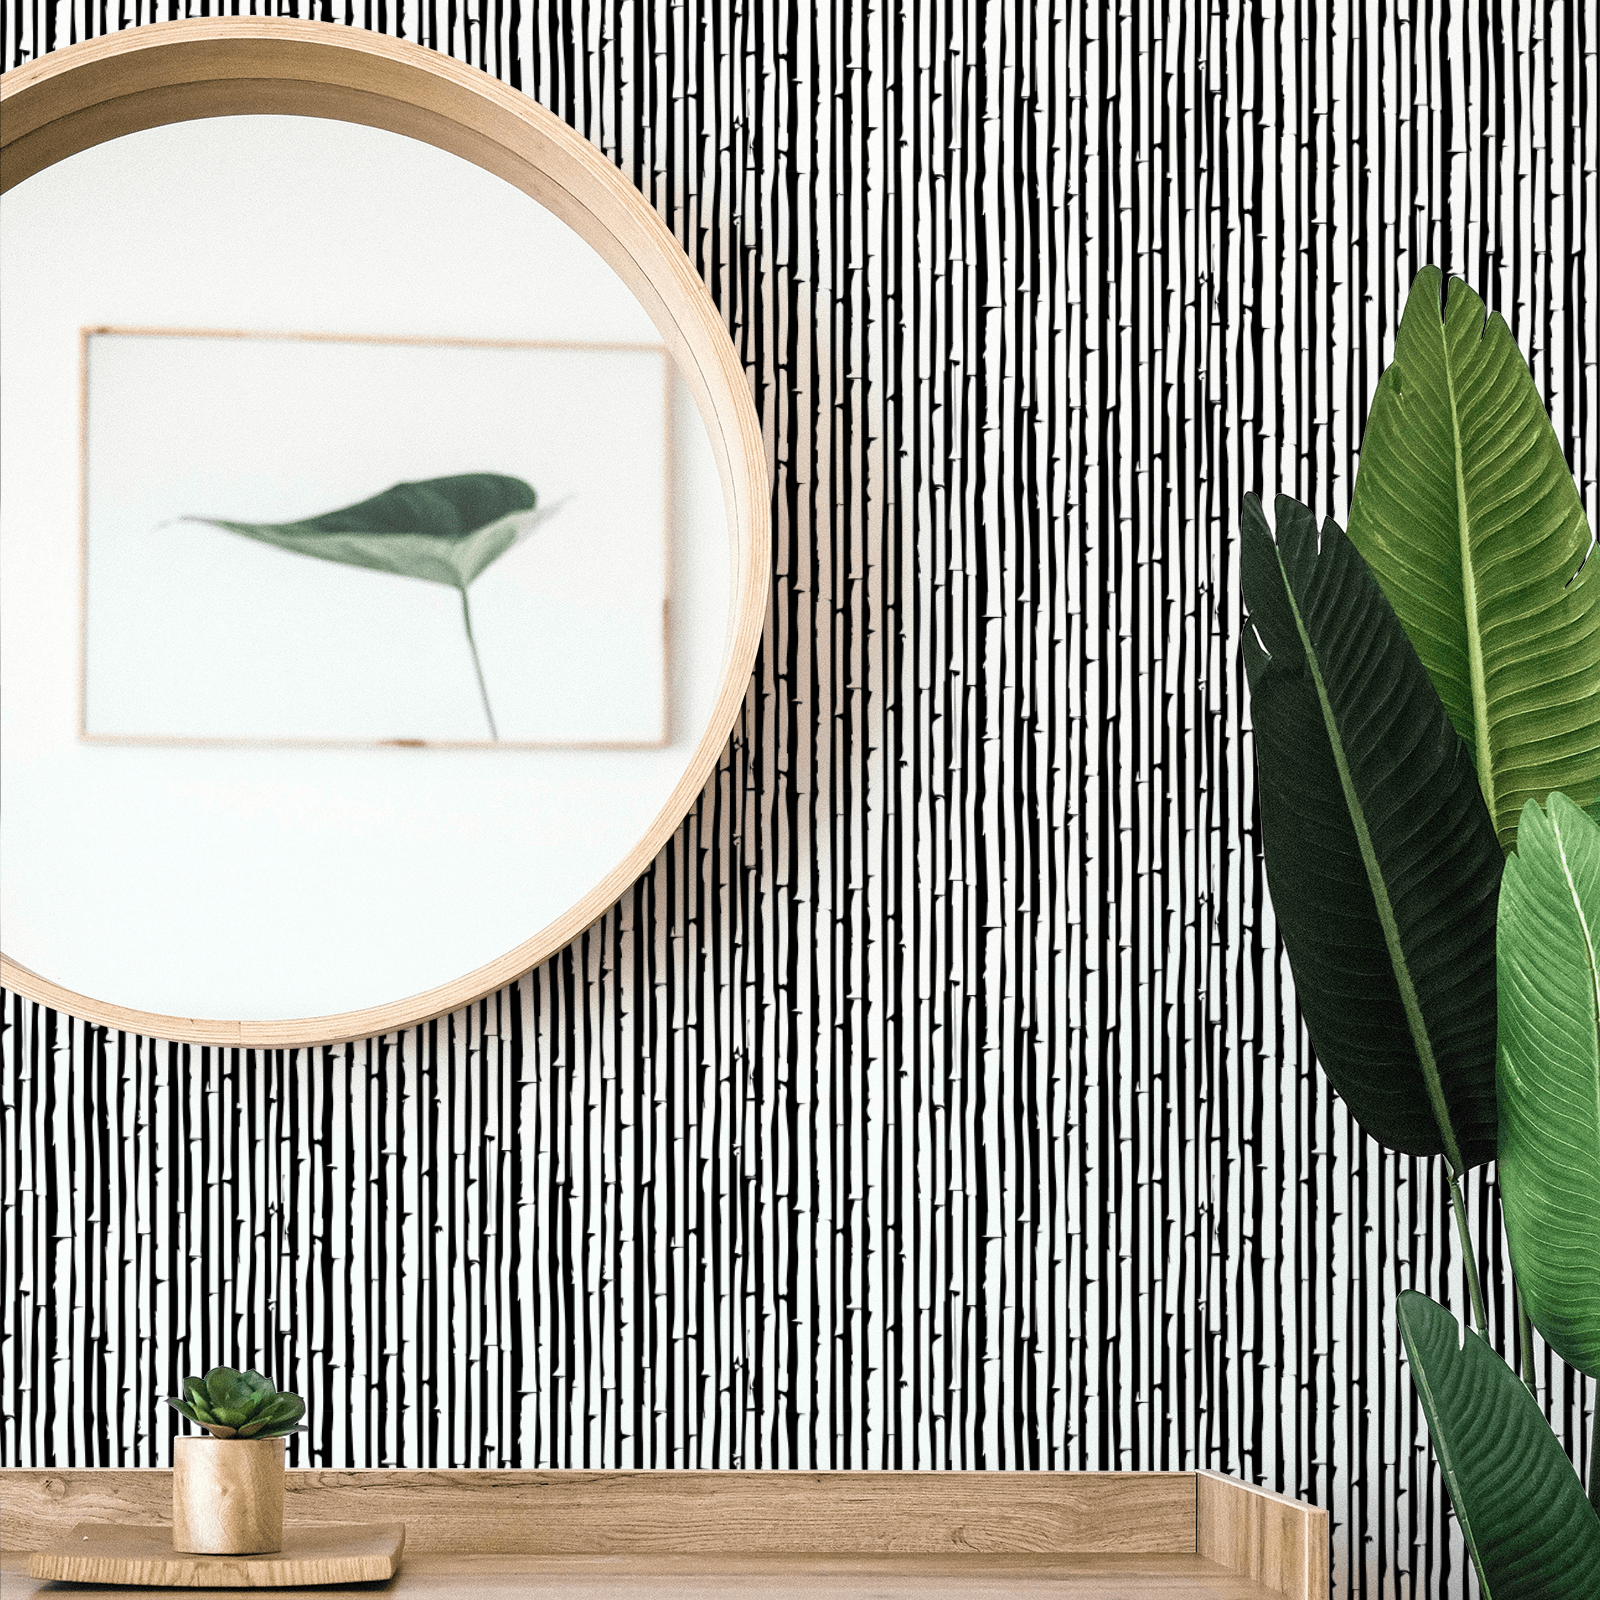 Heinrich 45x500 5Meter Green Bamboo Self Adhesive Wallpaper